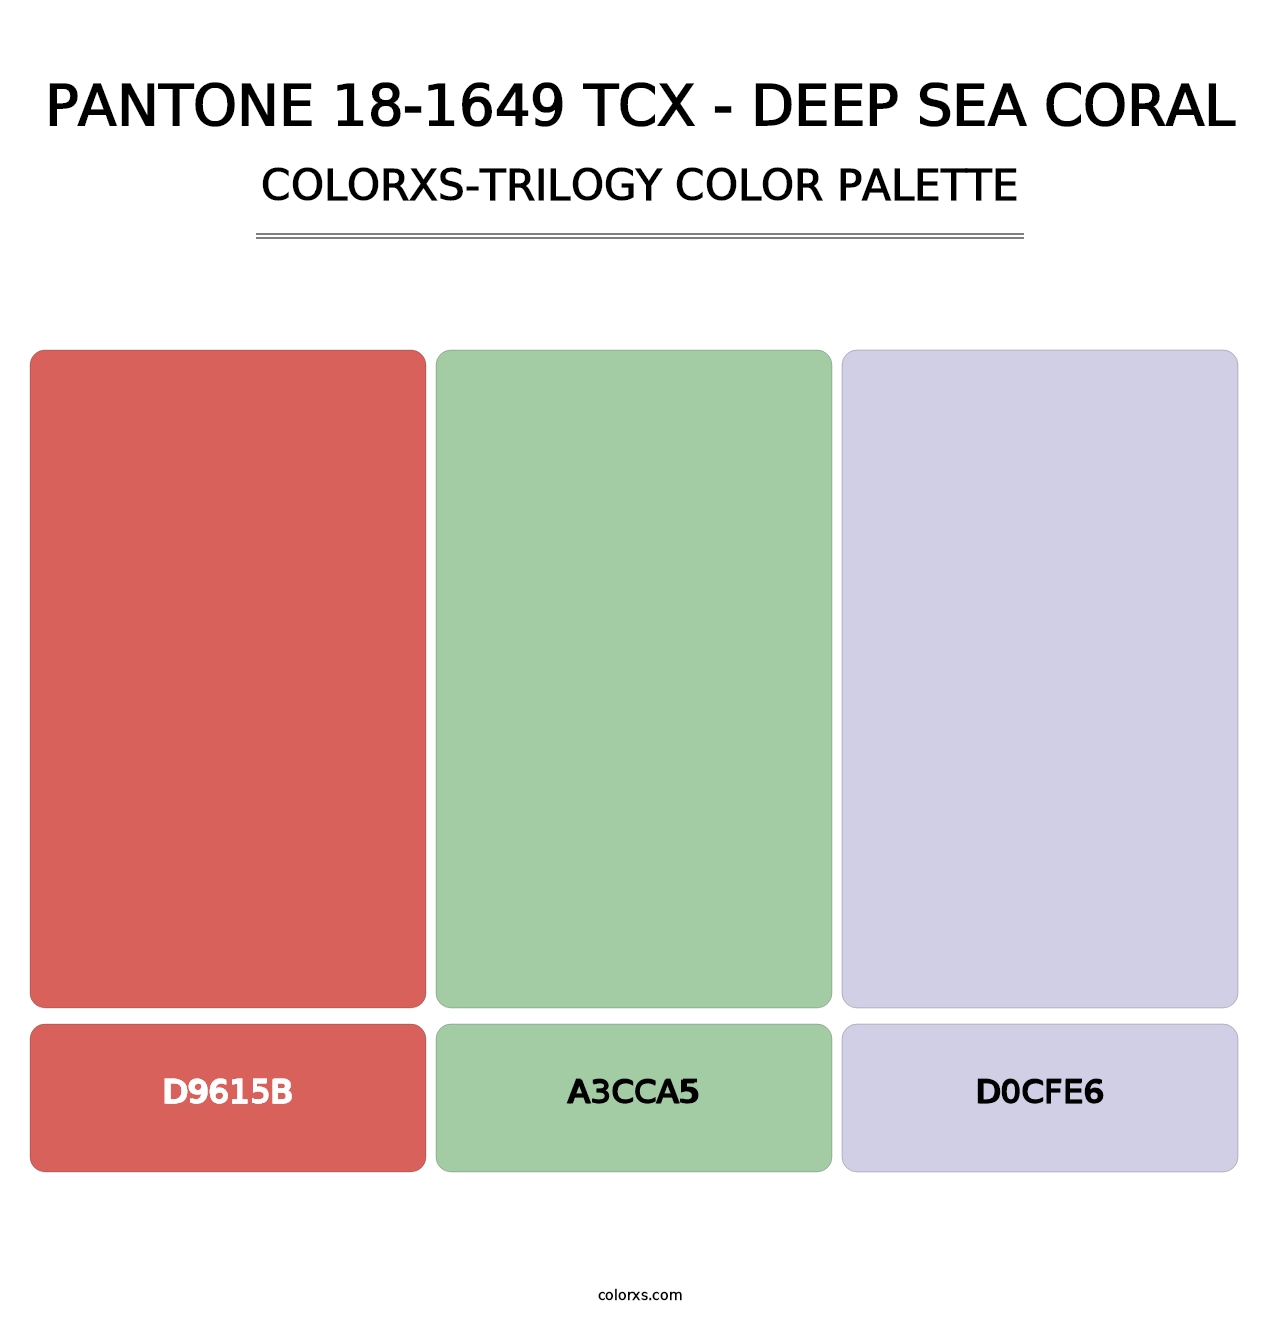 PANTONE 18-1649 TCX - Deep Sea Coral - Colorxs Trilogy Palette